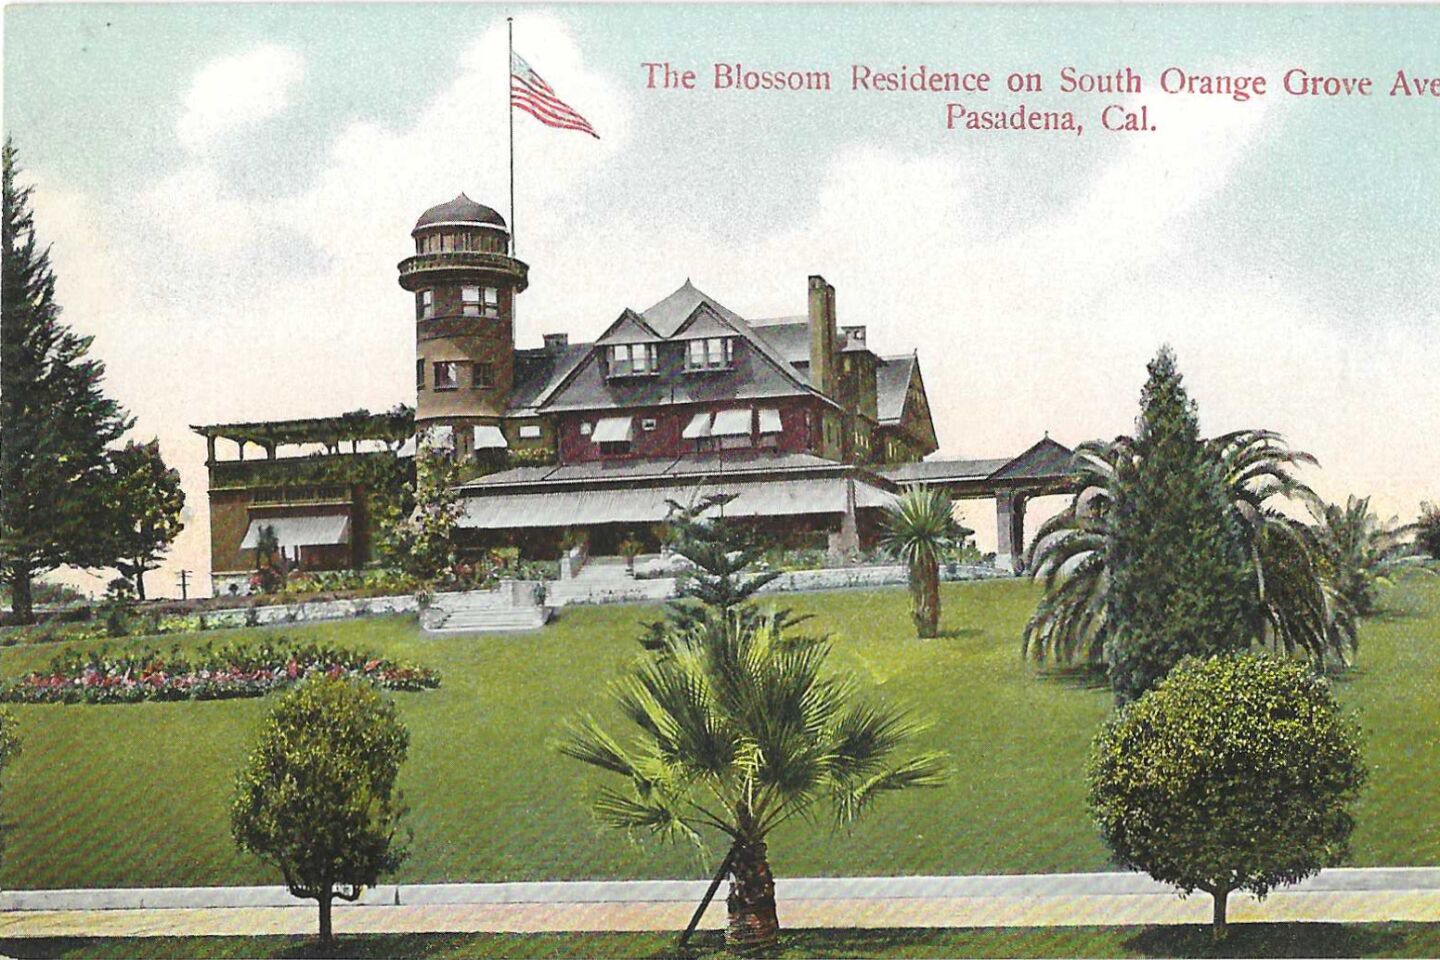 The Blossom Residence on South Orange Grove Ave., Pasadena, Cal.